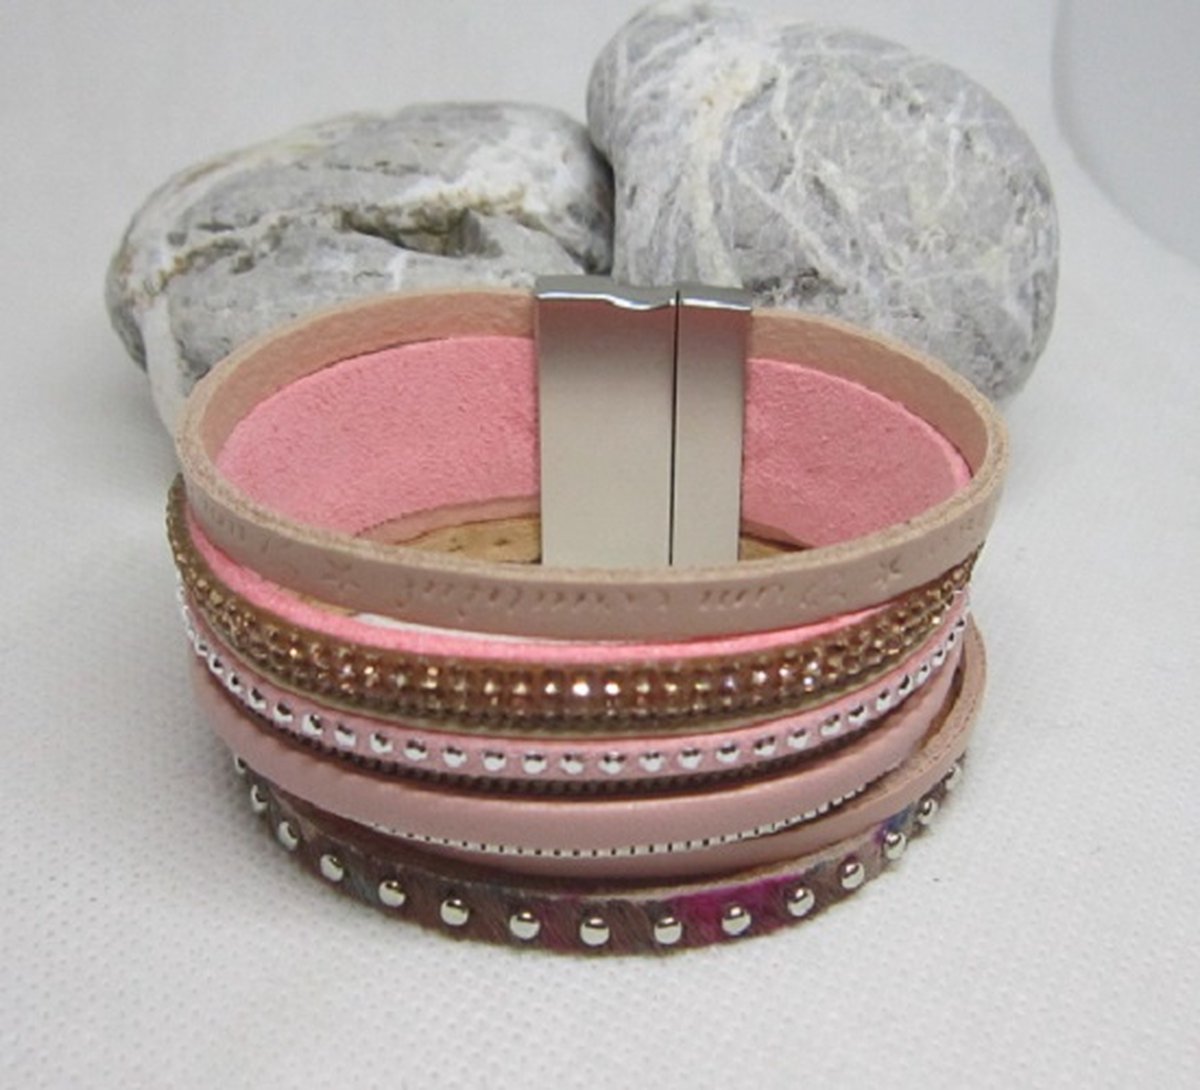 Armband - 4 losse banden - 1 sluiting - leer - stof- Ibiza - Bohio - roze - wit - goud - zilver- magneet sluiting - lengte 20 cm